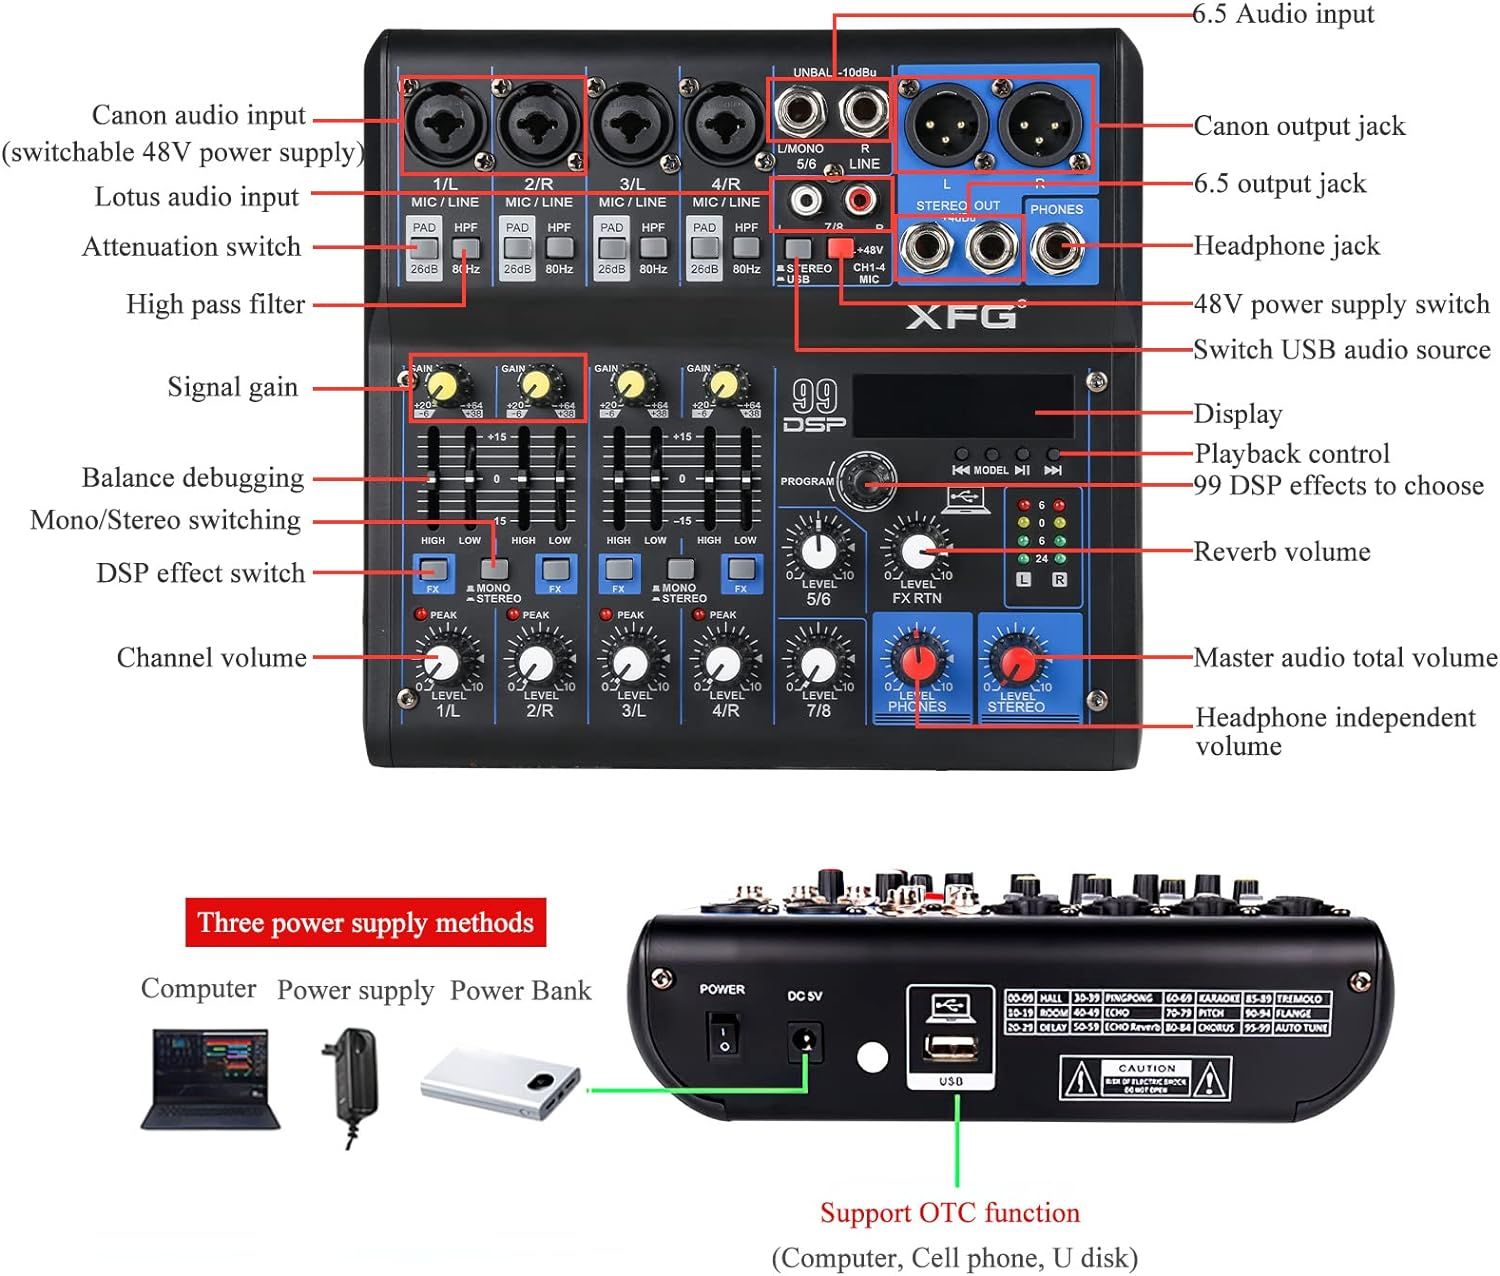 Soundboard,Sound Effects Board,Sound Board,Sound Mixer Board